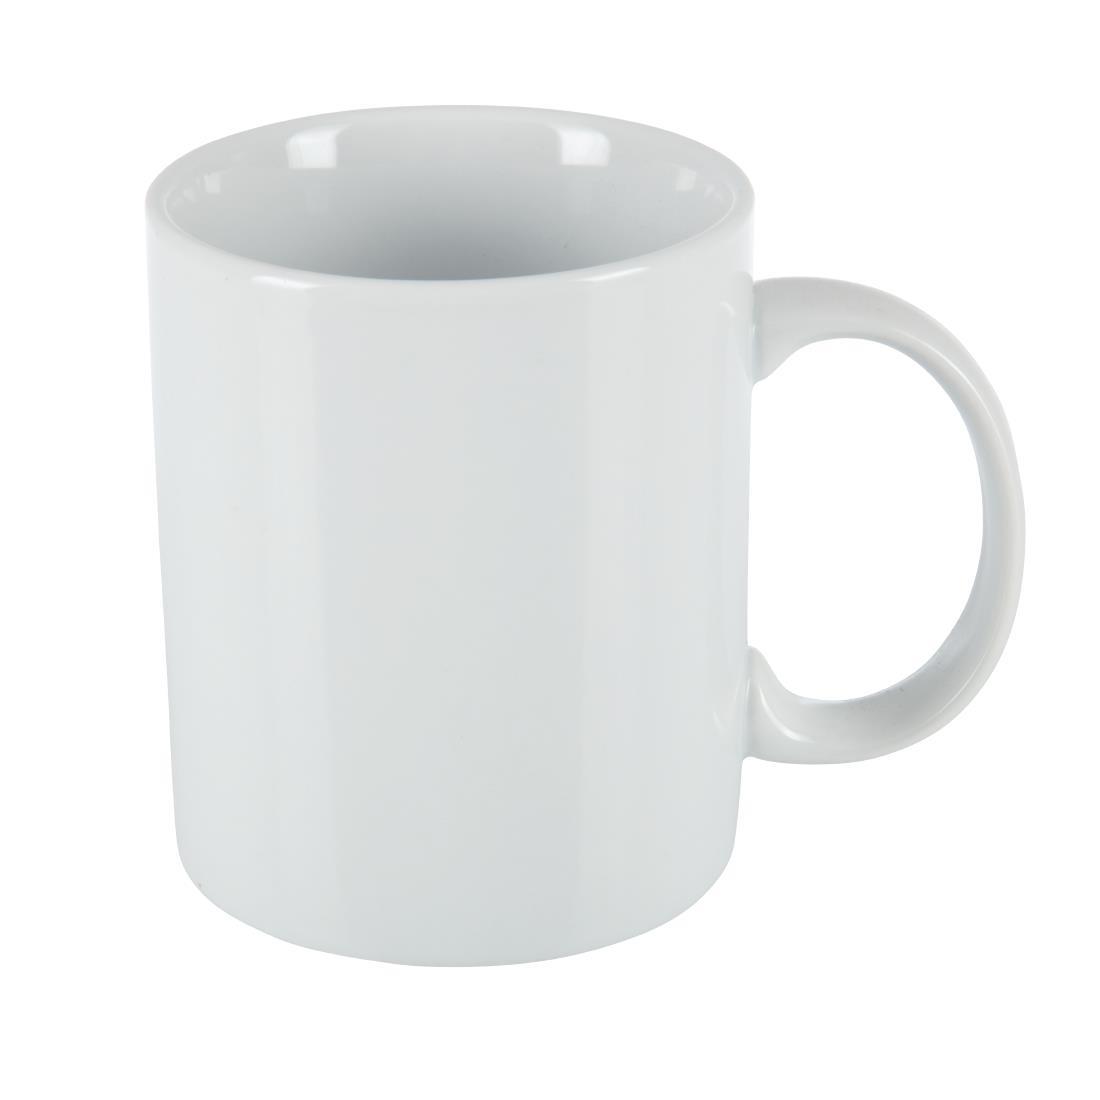 Olympia Whiteware Standard Mugs 10oz 284ml (Pack of 12) - CB466  - 1